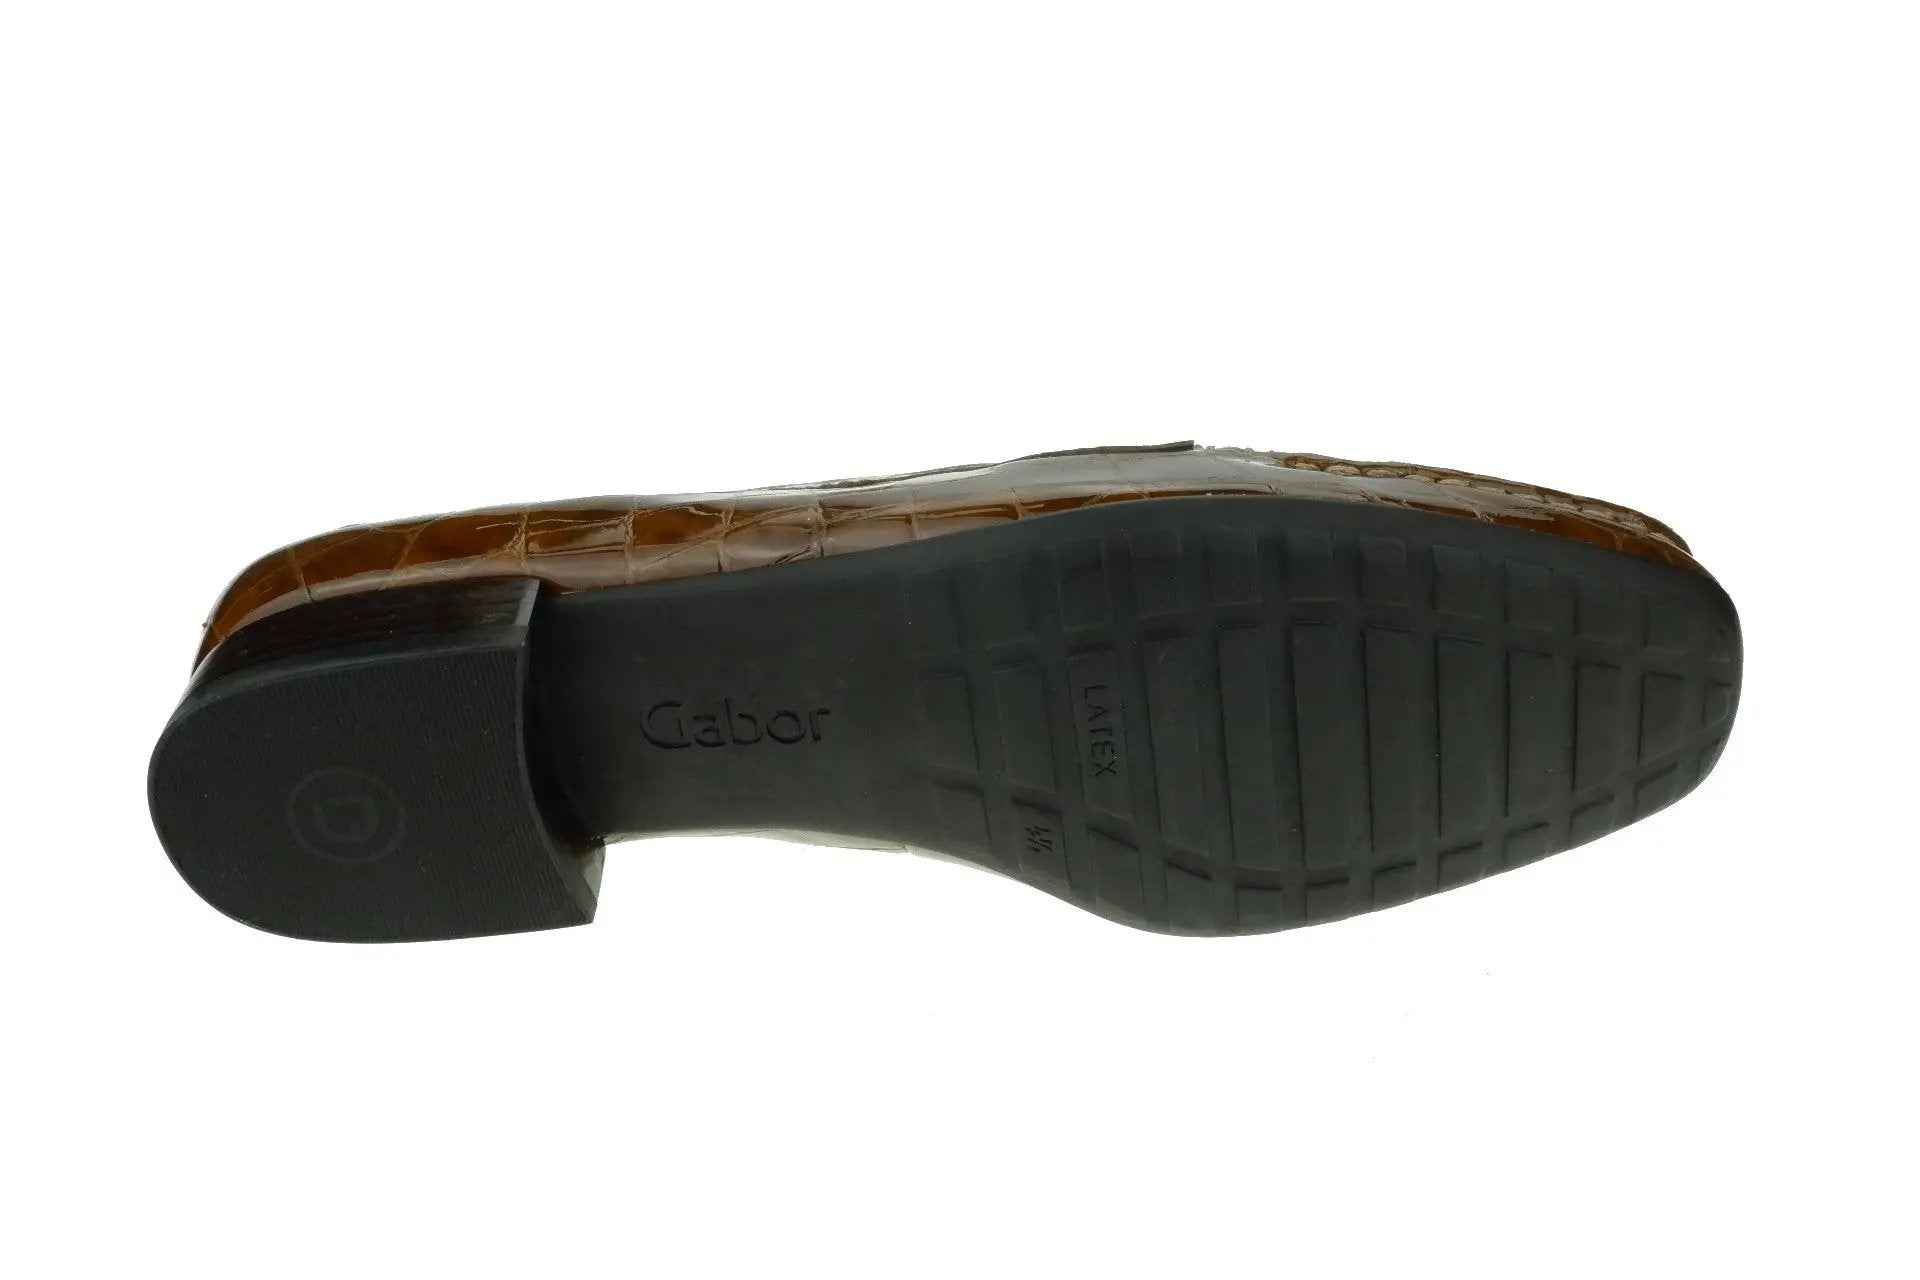 '96.324.34' women's pump - Patent brown - Chaplinshoes'96.324.34' women's pump - Patent brownGabor